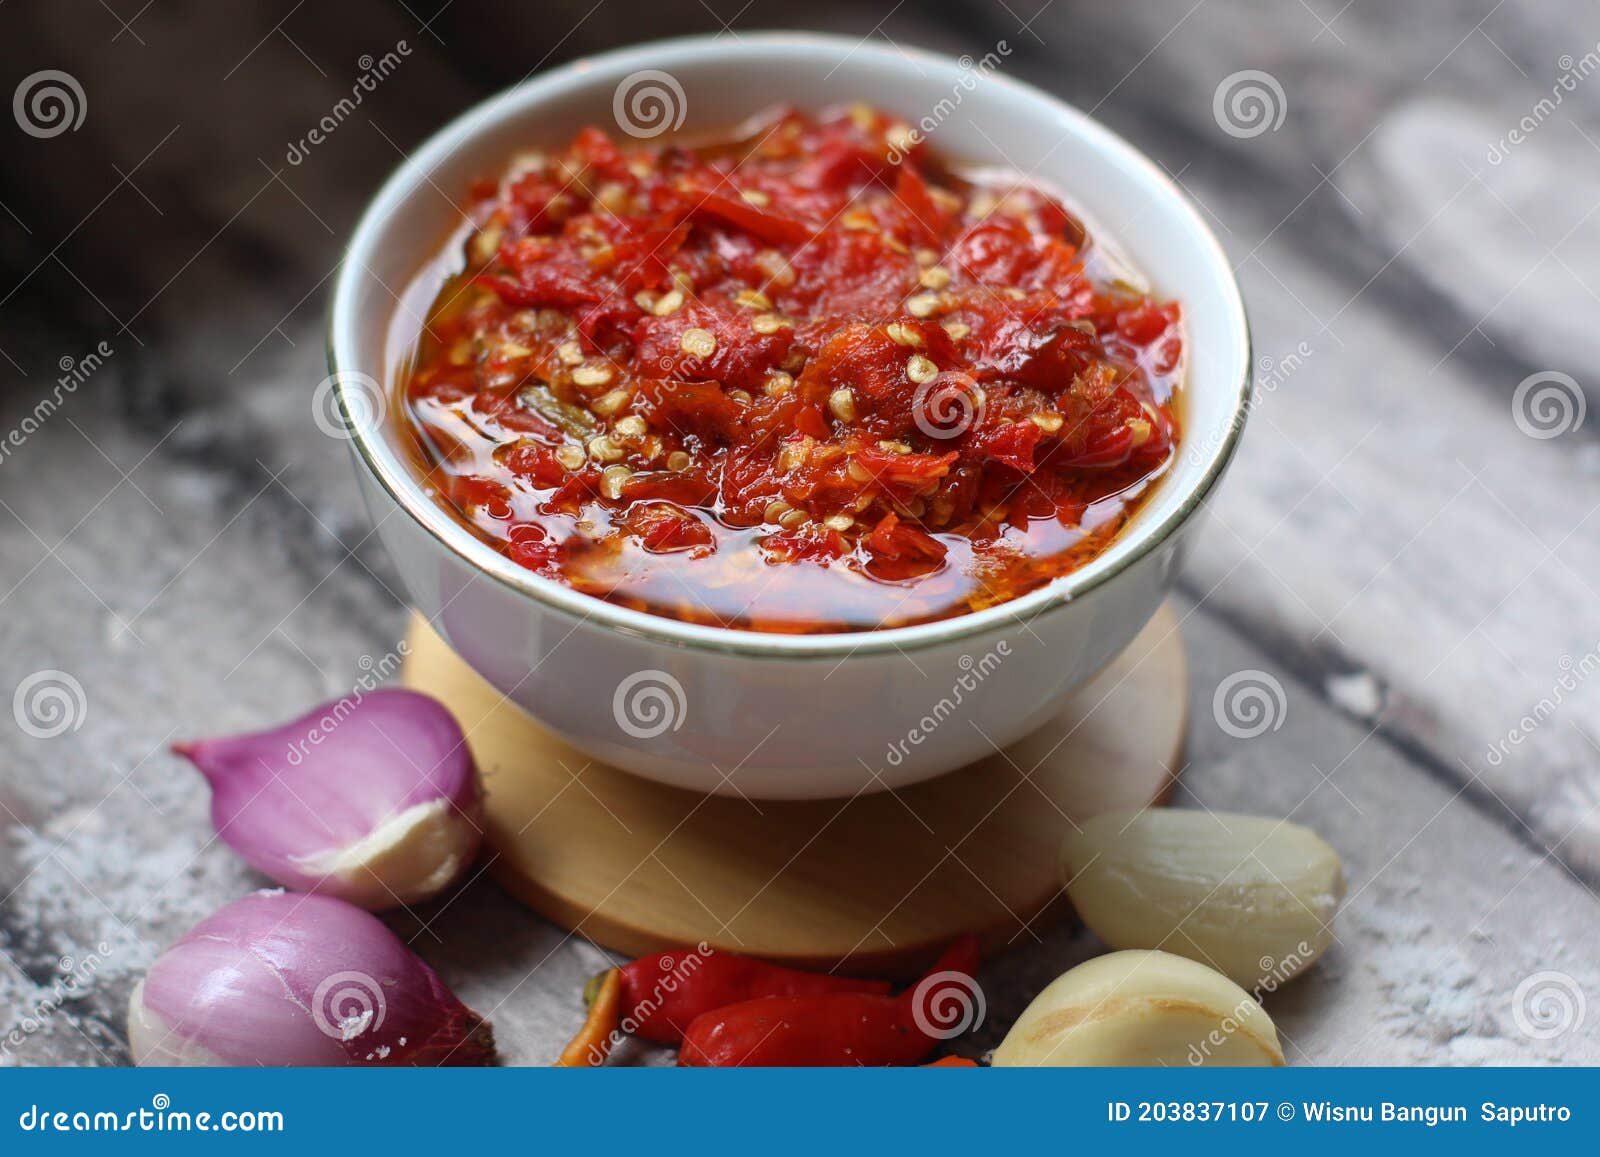 sambal bawang or spicy onion sauce